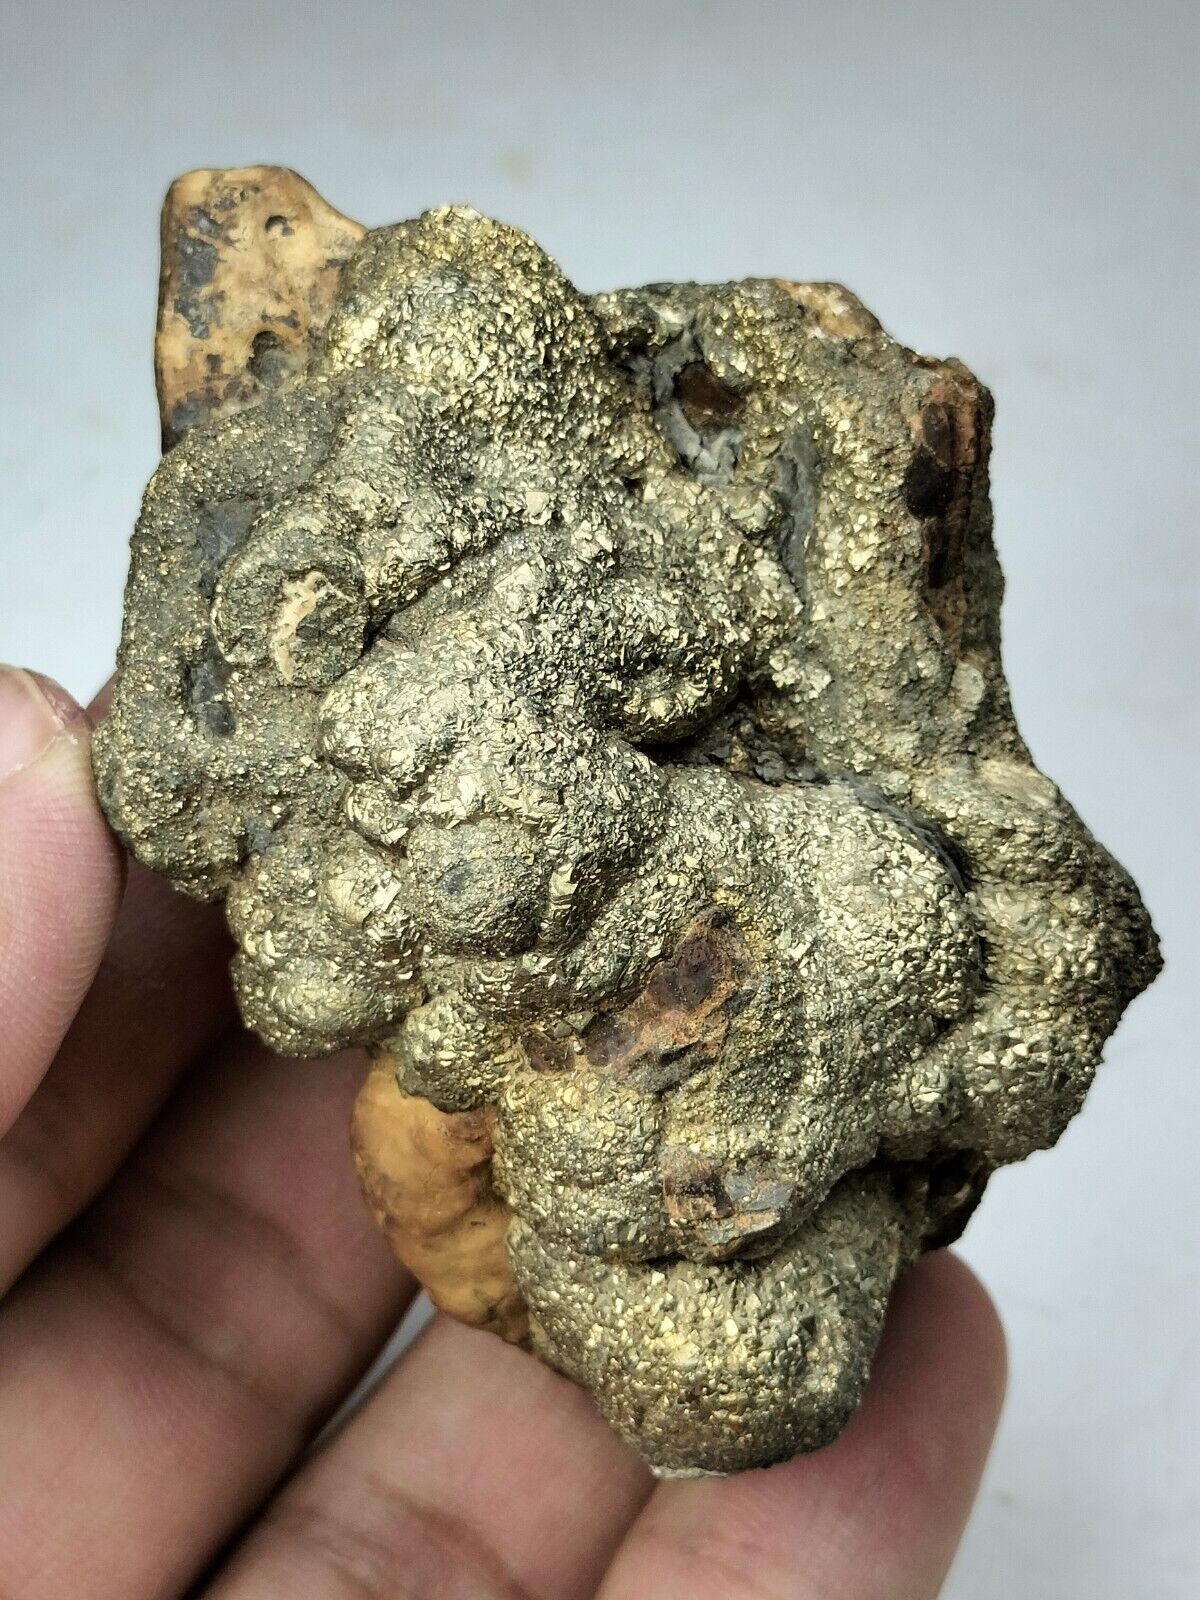 165-gm Golden Pyrite/Marcasite Specimen with Good Luster & Termination-Mansehra.